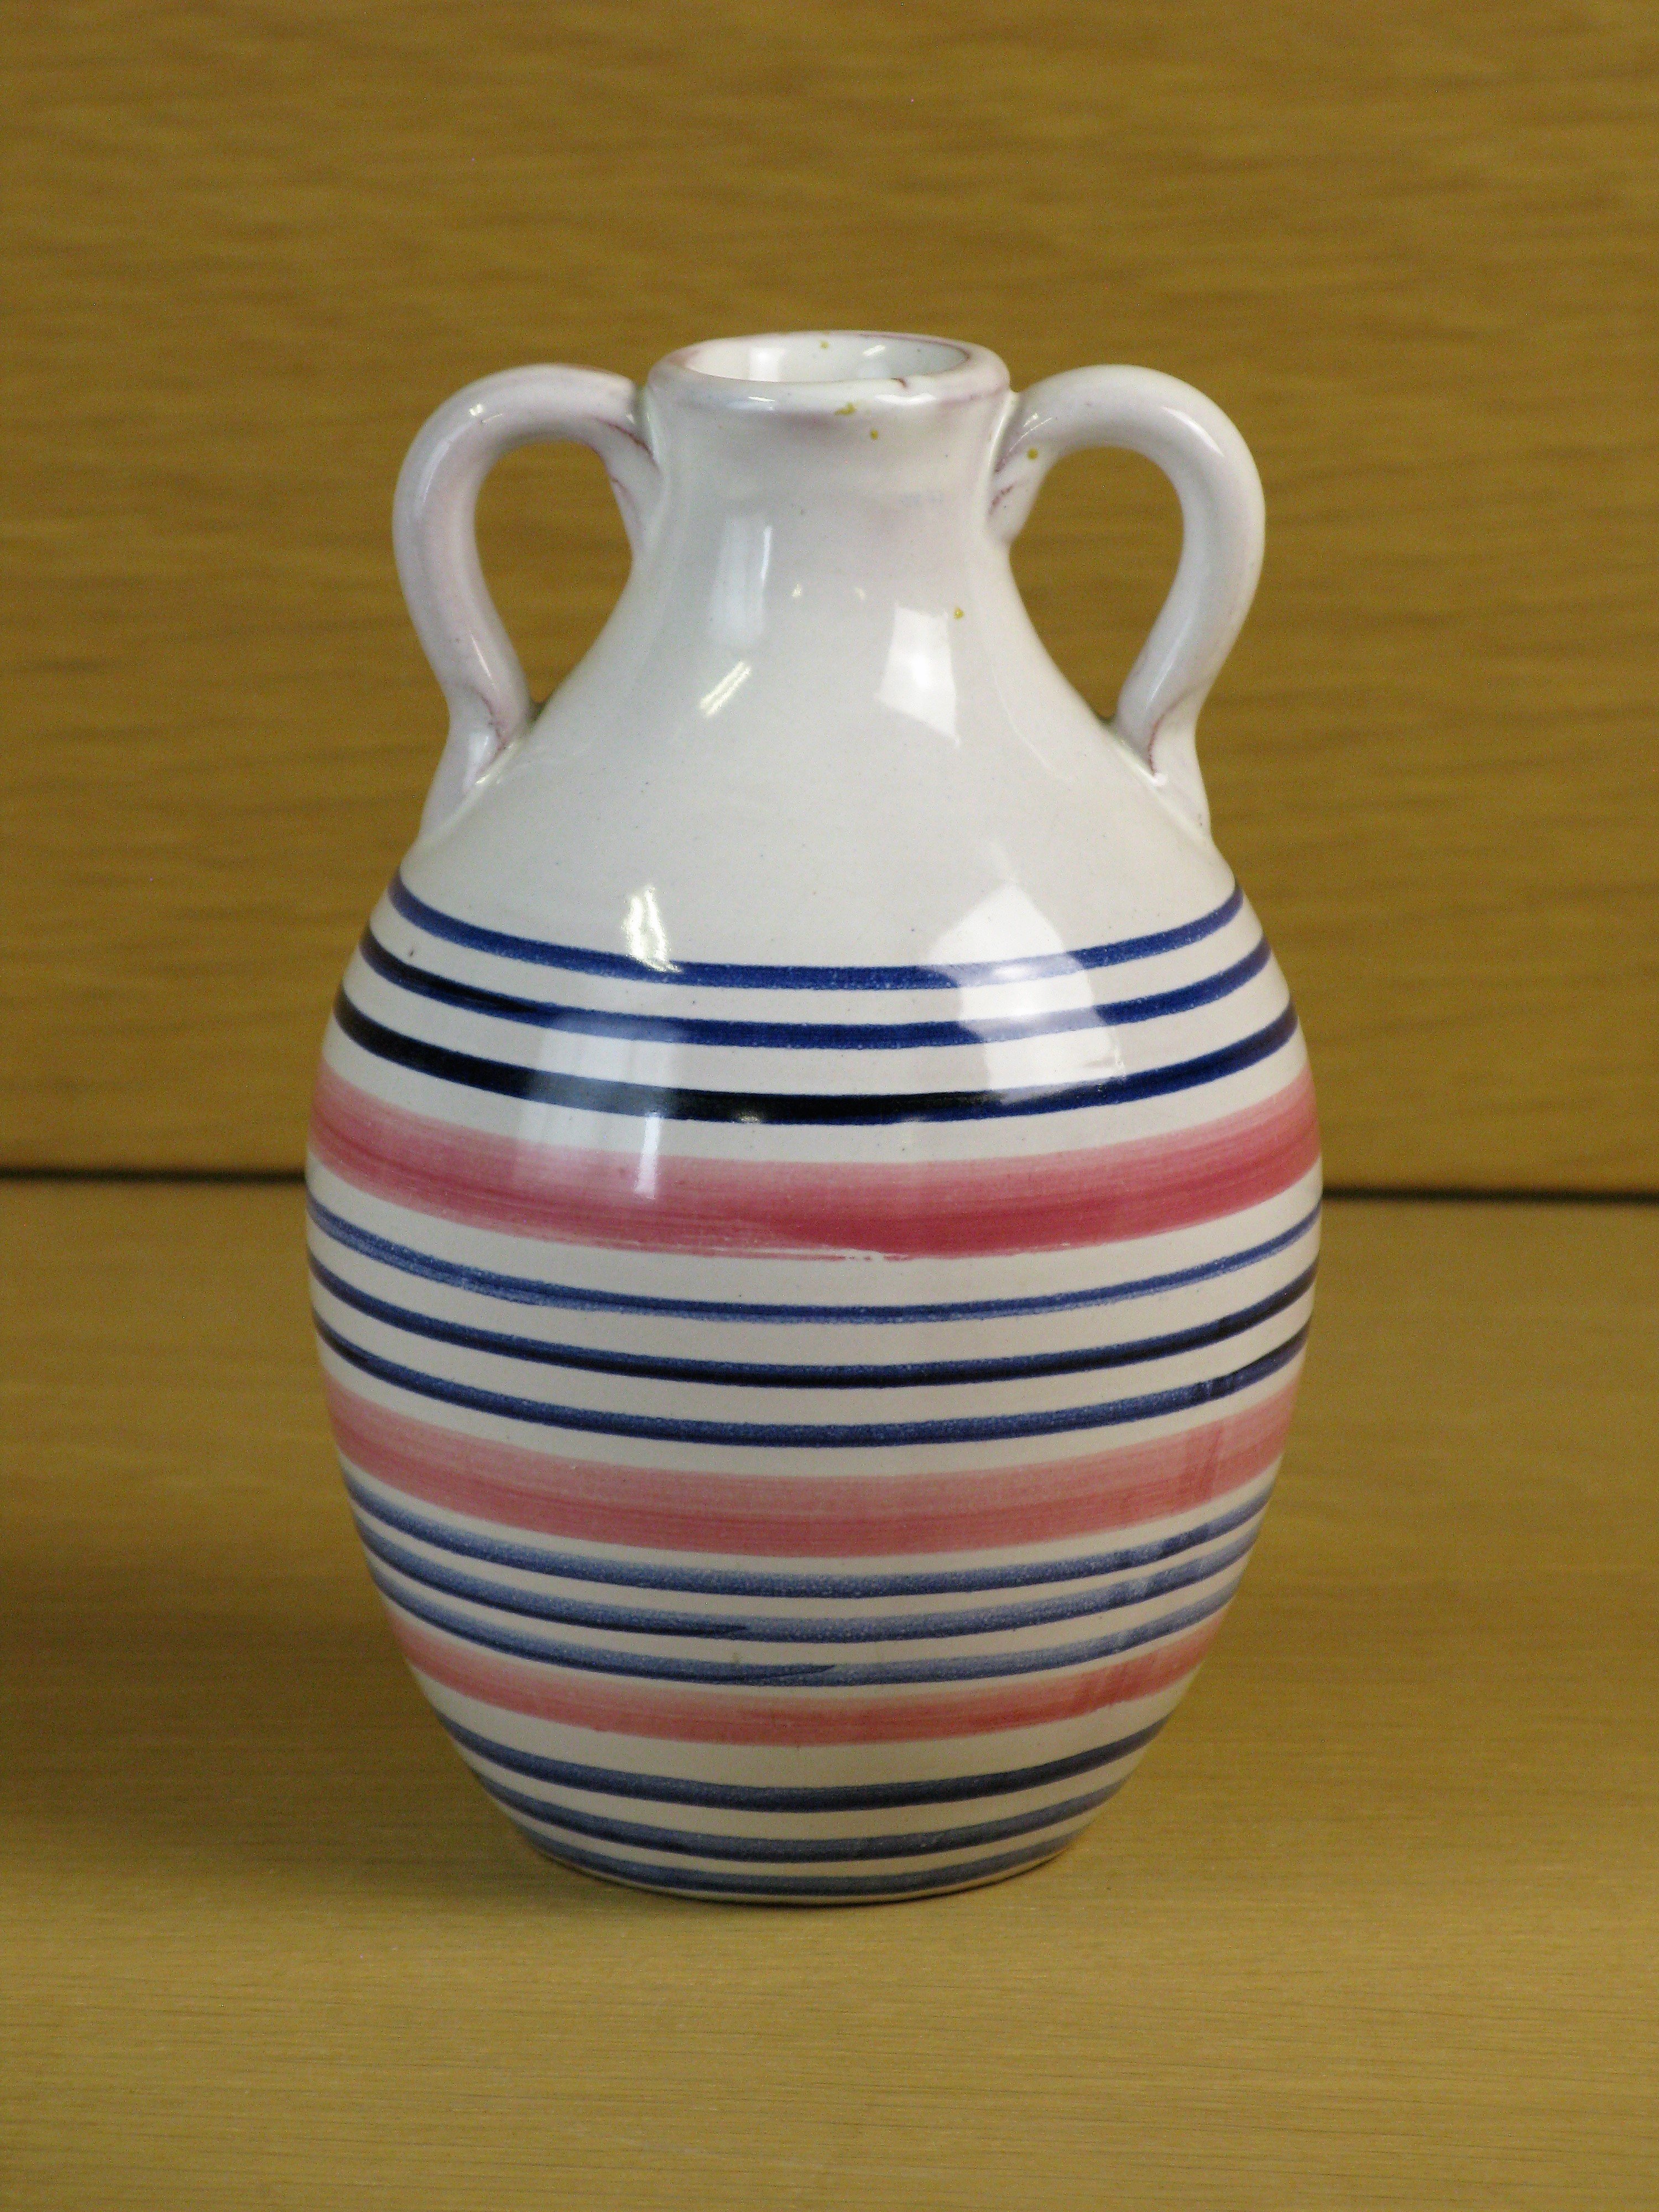 tricolor vase 642